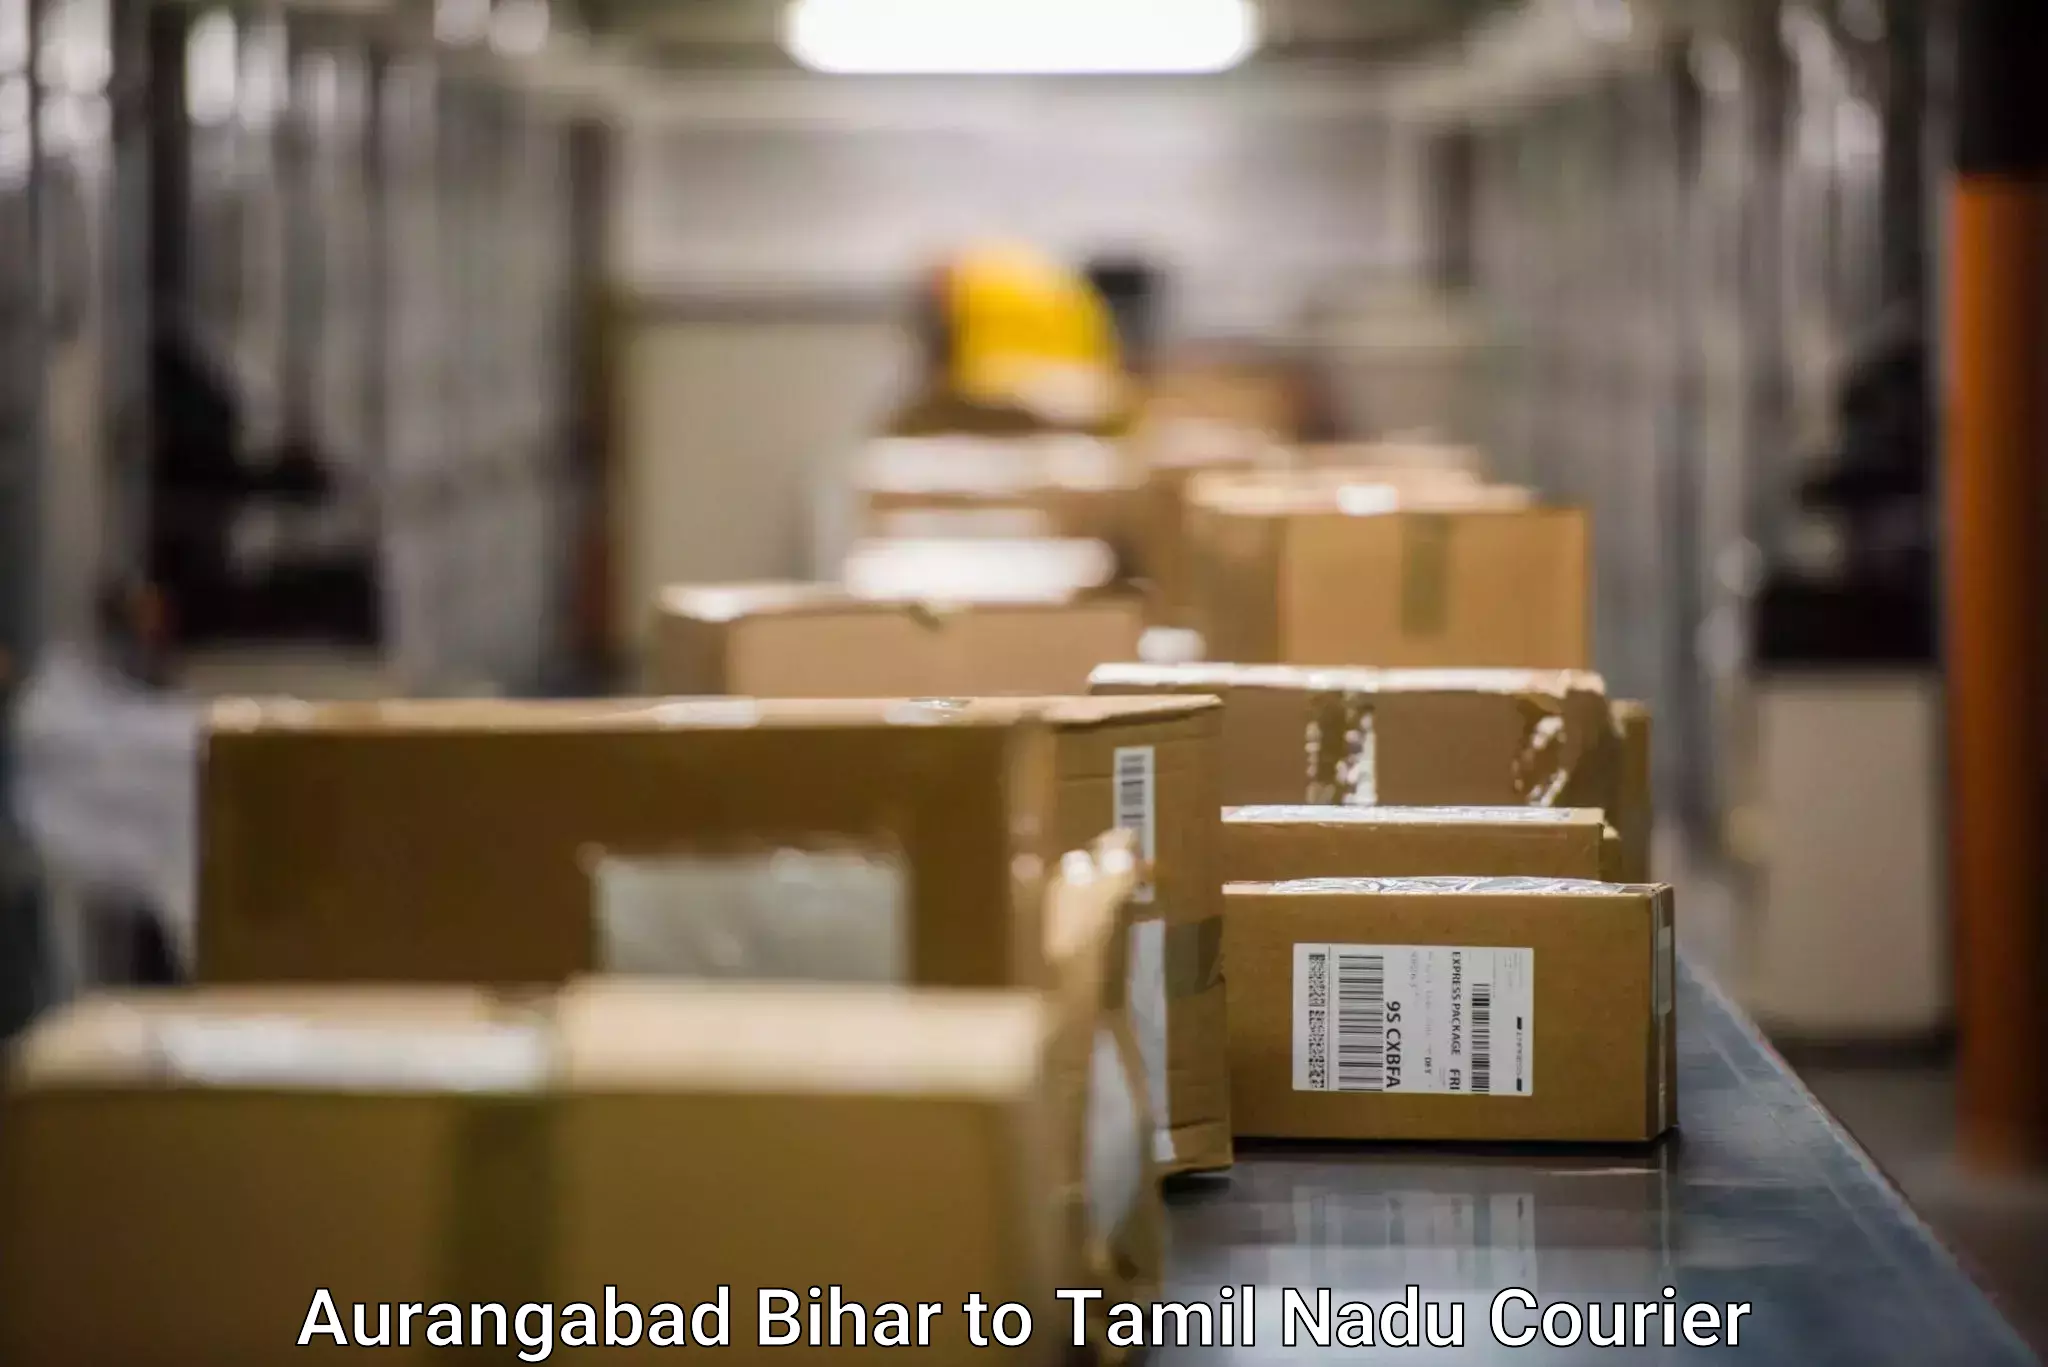 Smart shipping technology Aurangabad Bihar to Kanchipuram